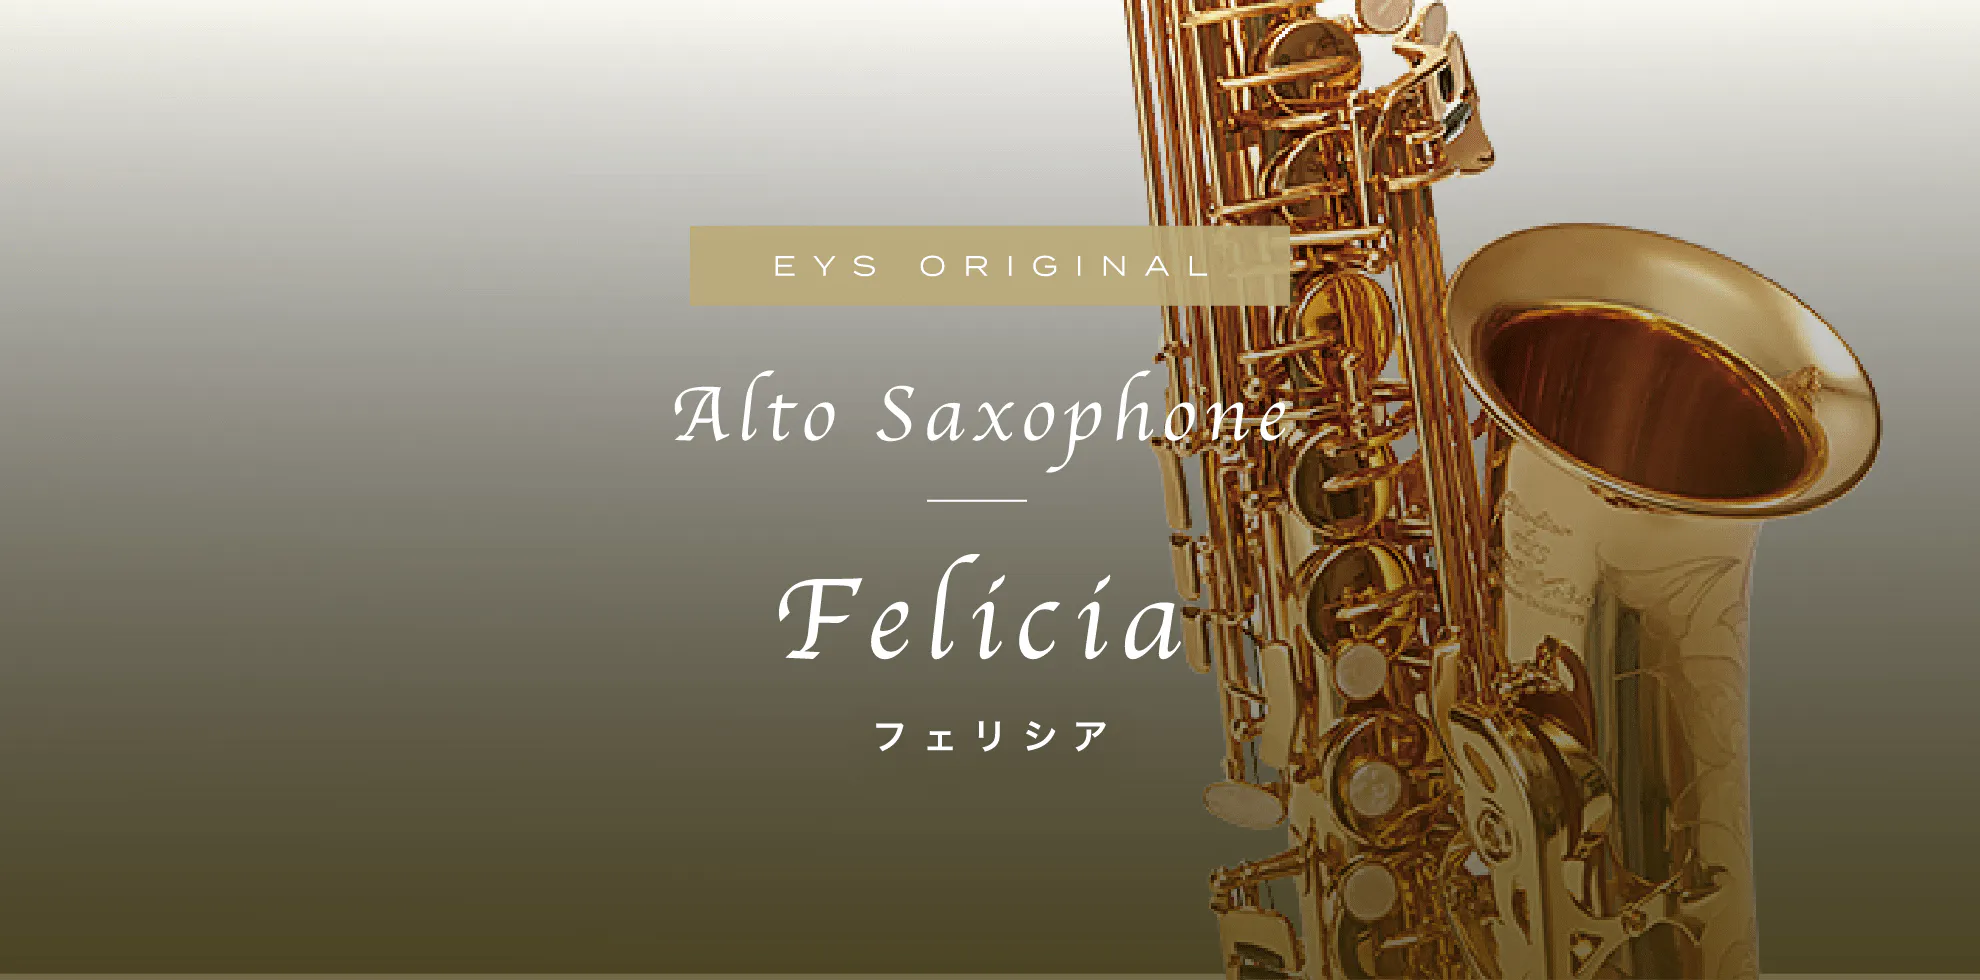 EYS ORIGINAL Alto Saxophone Felicia フェリシア